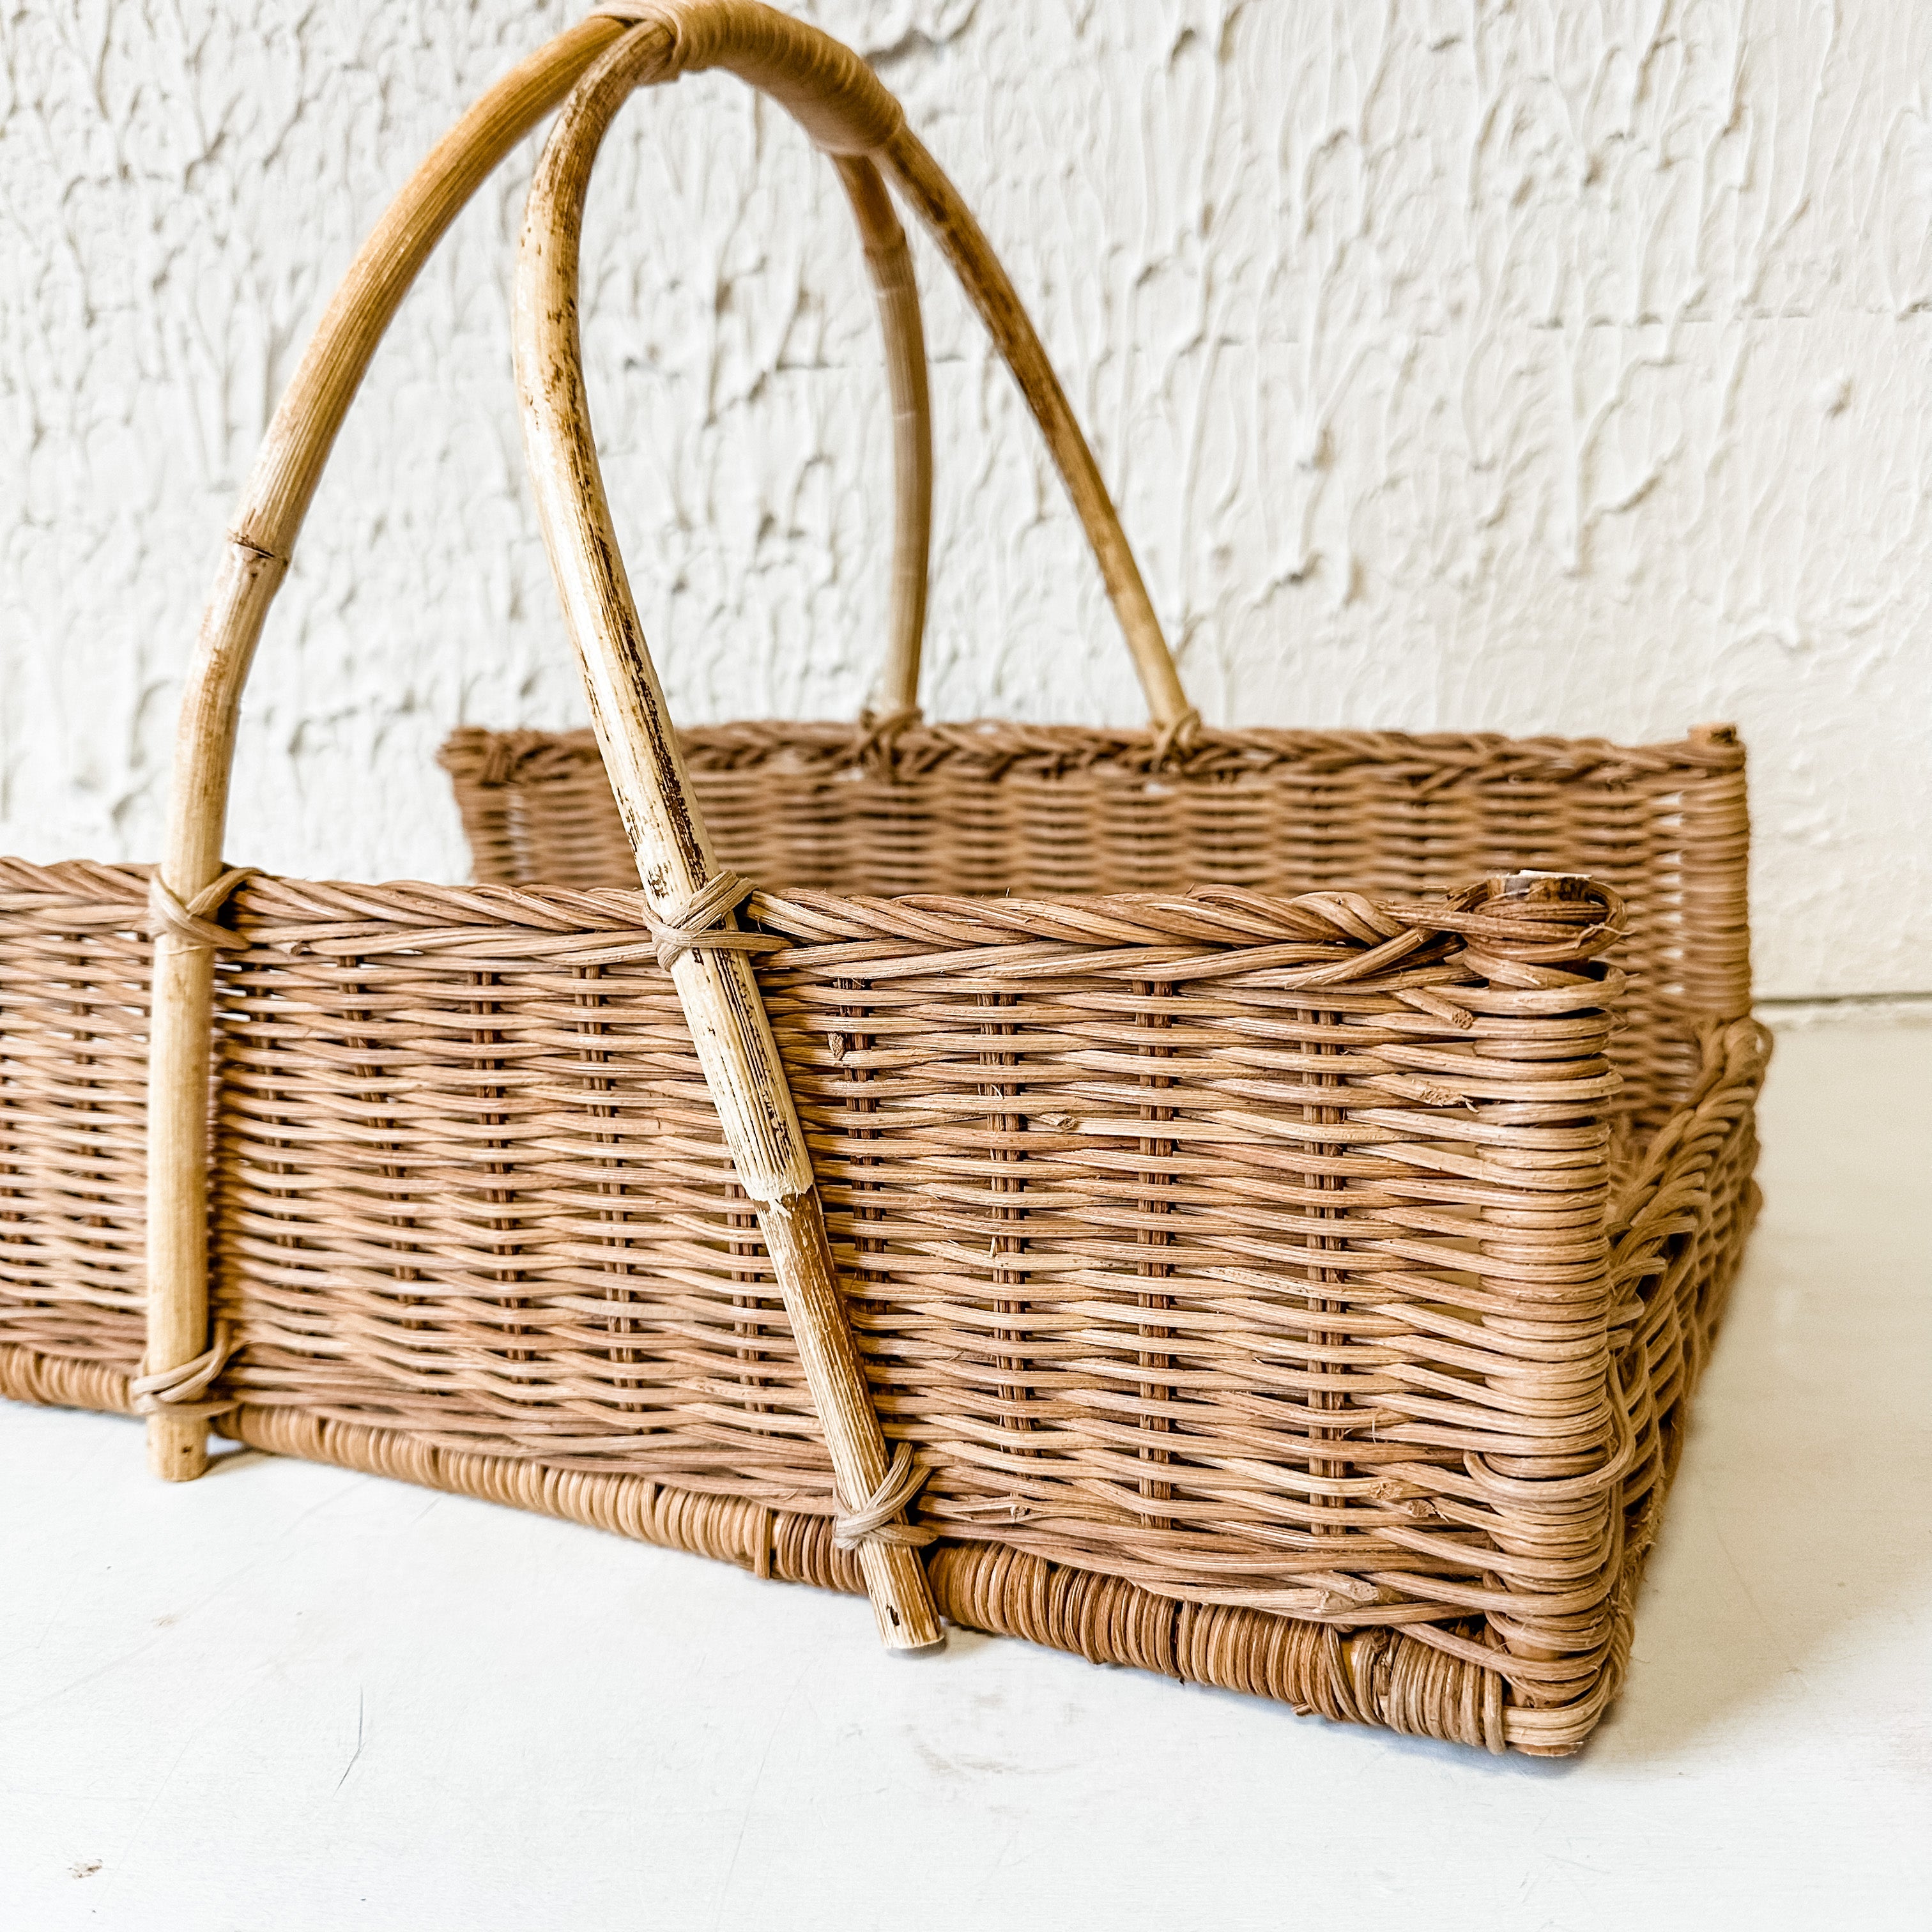 Hand-woven Rattan Basket With Handle